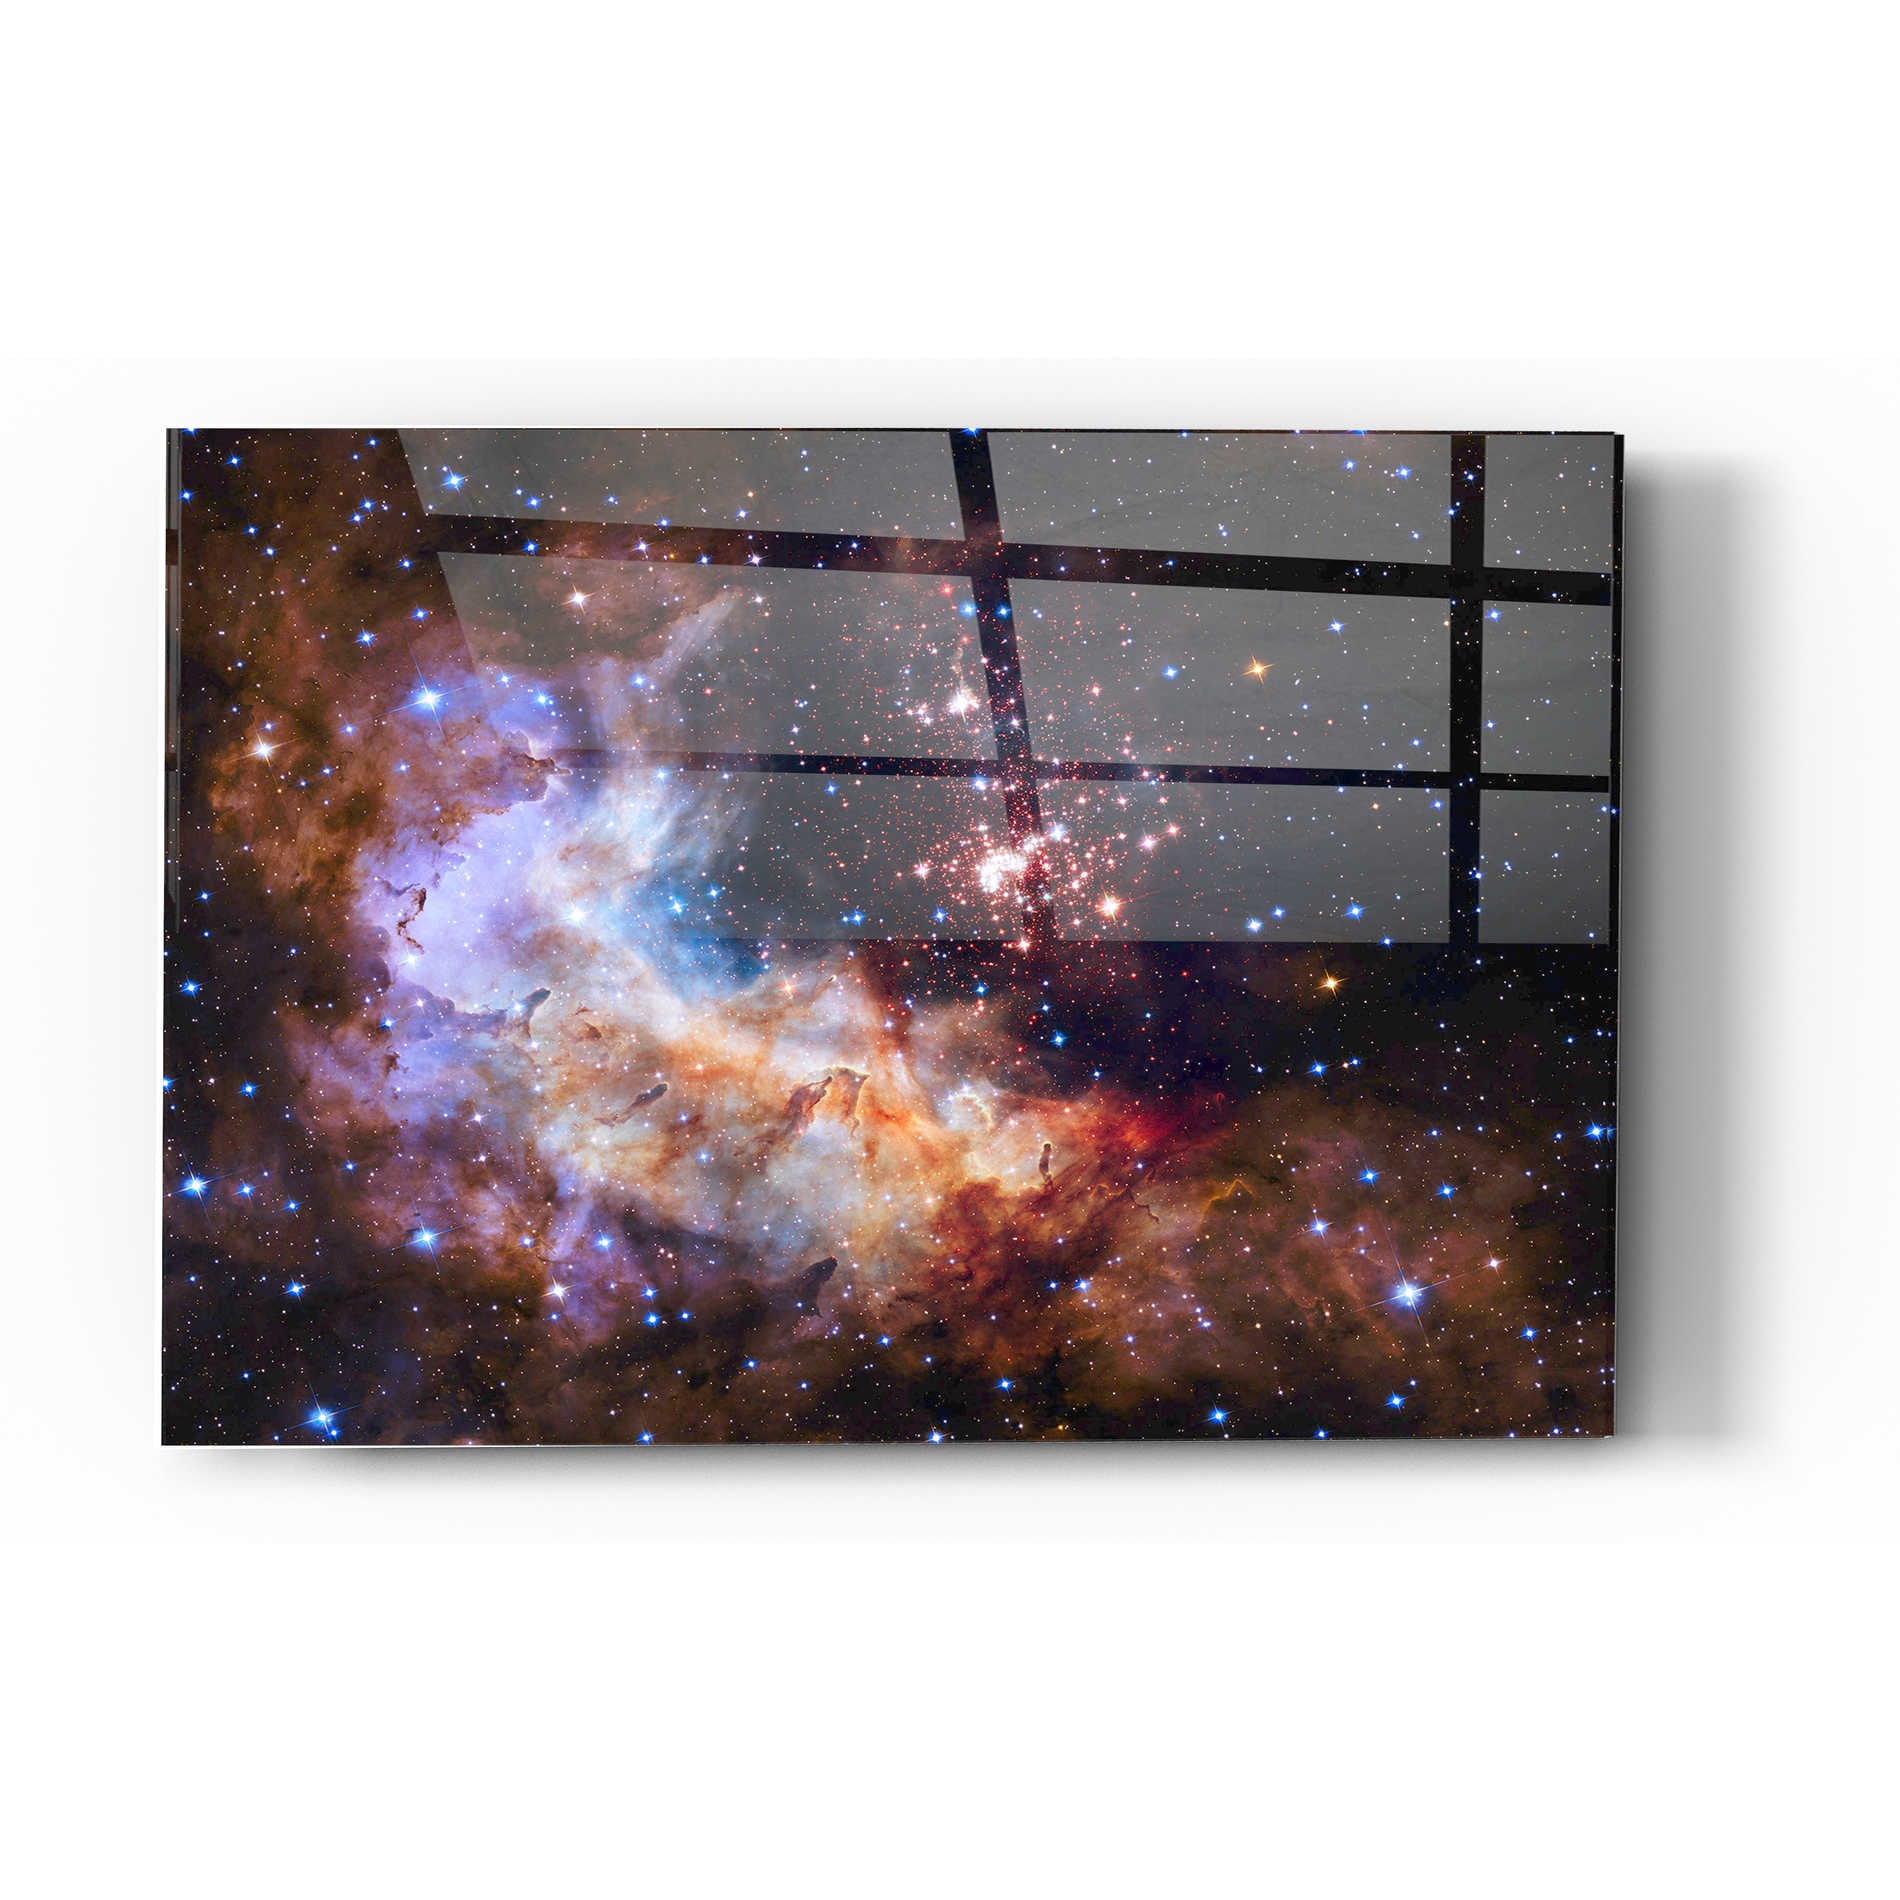 Epic Art 'Celestial Fireworks' Hubble Space Telescope Acrylic Glass Wall Art,16x24